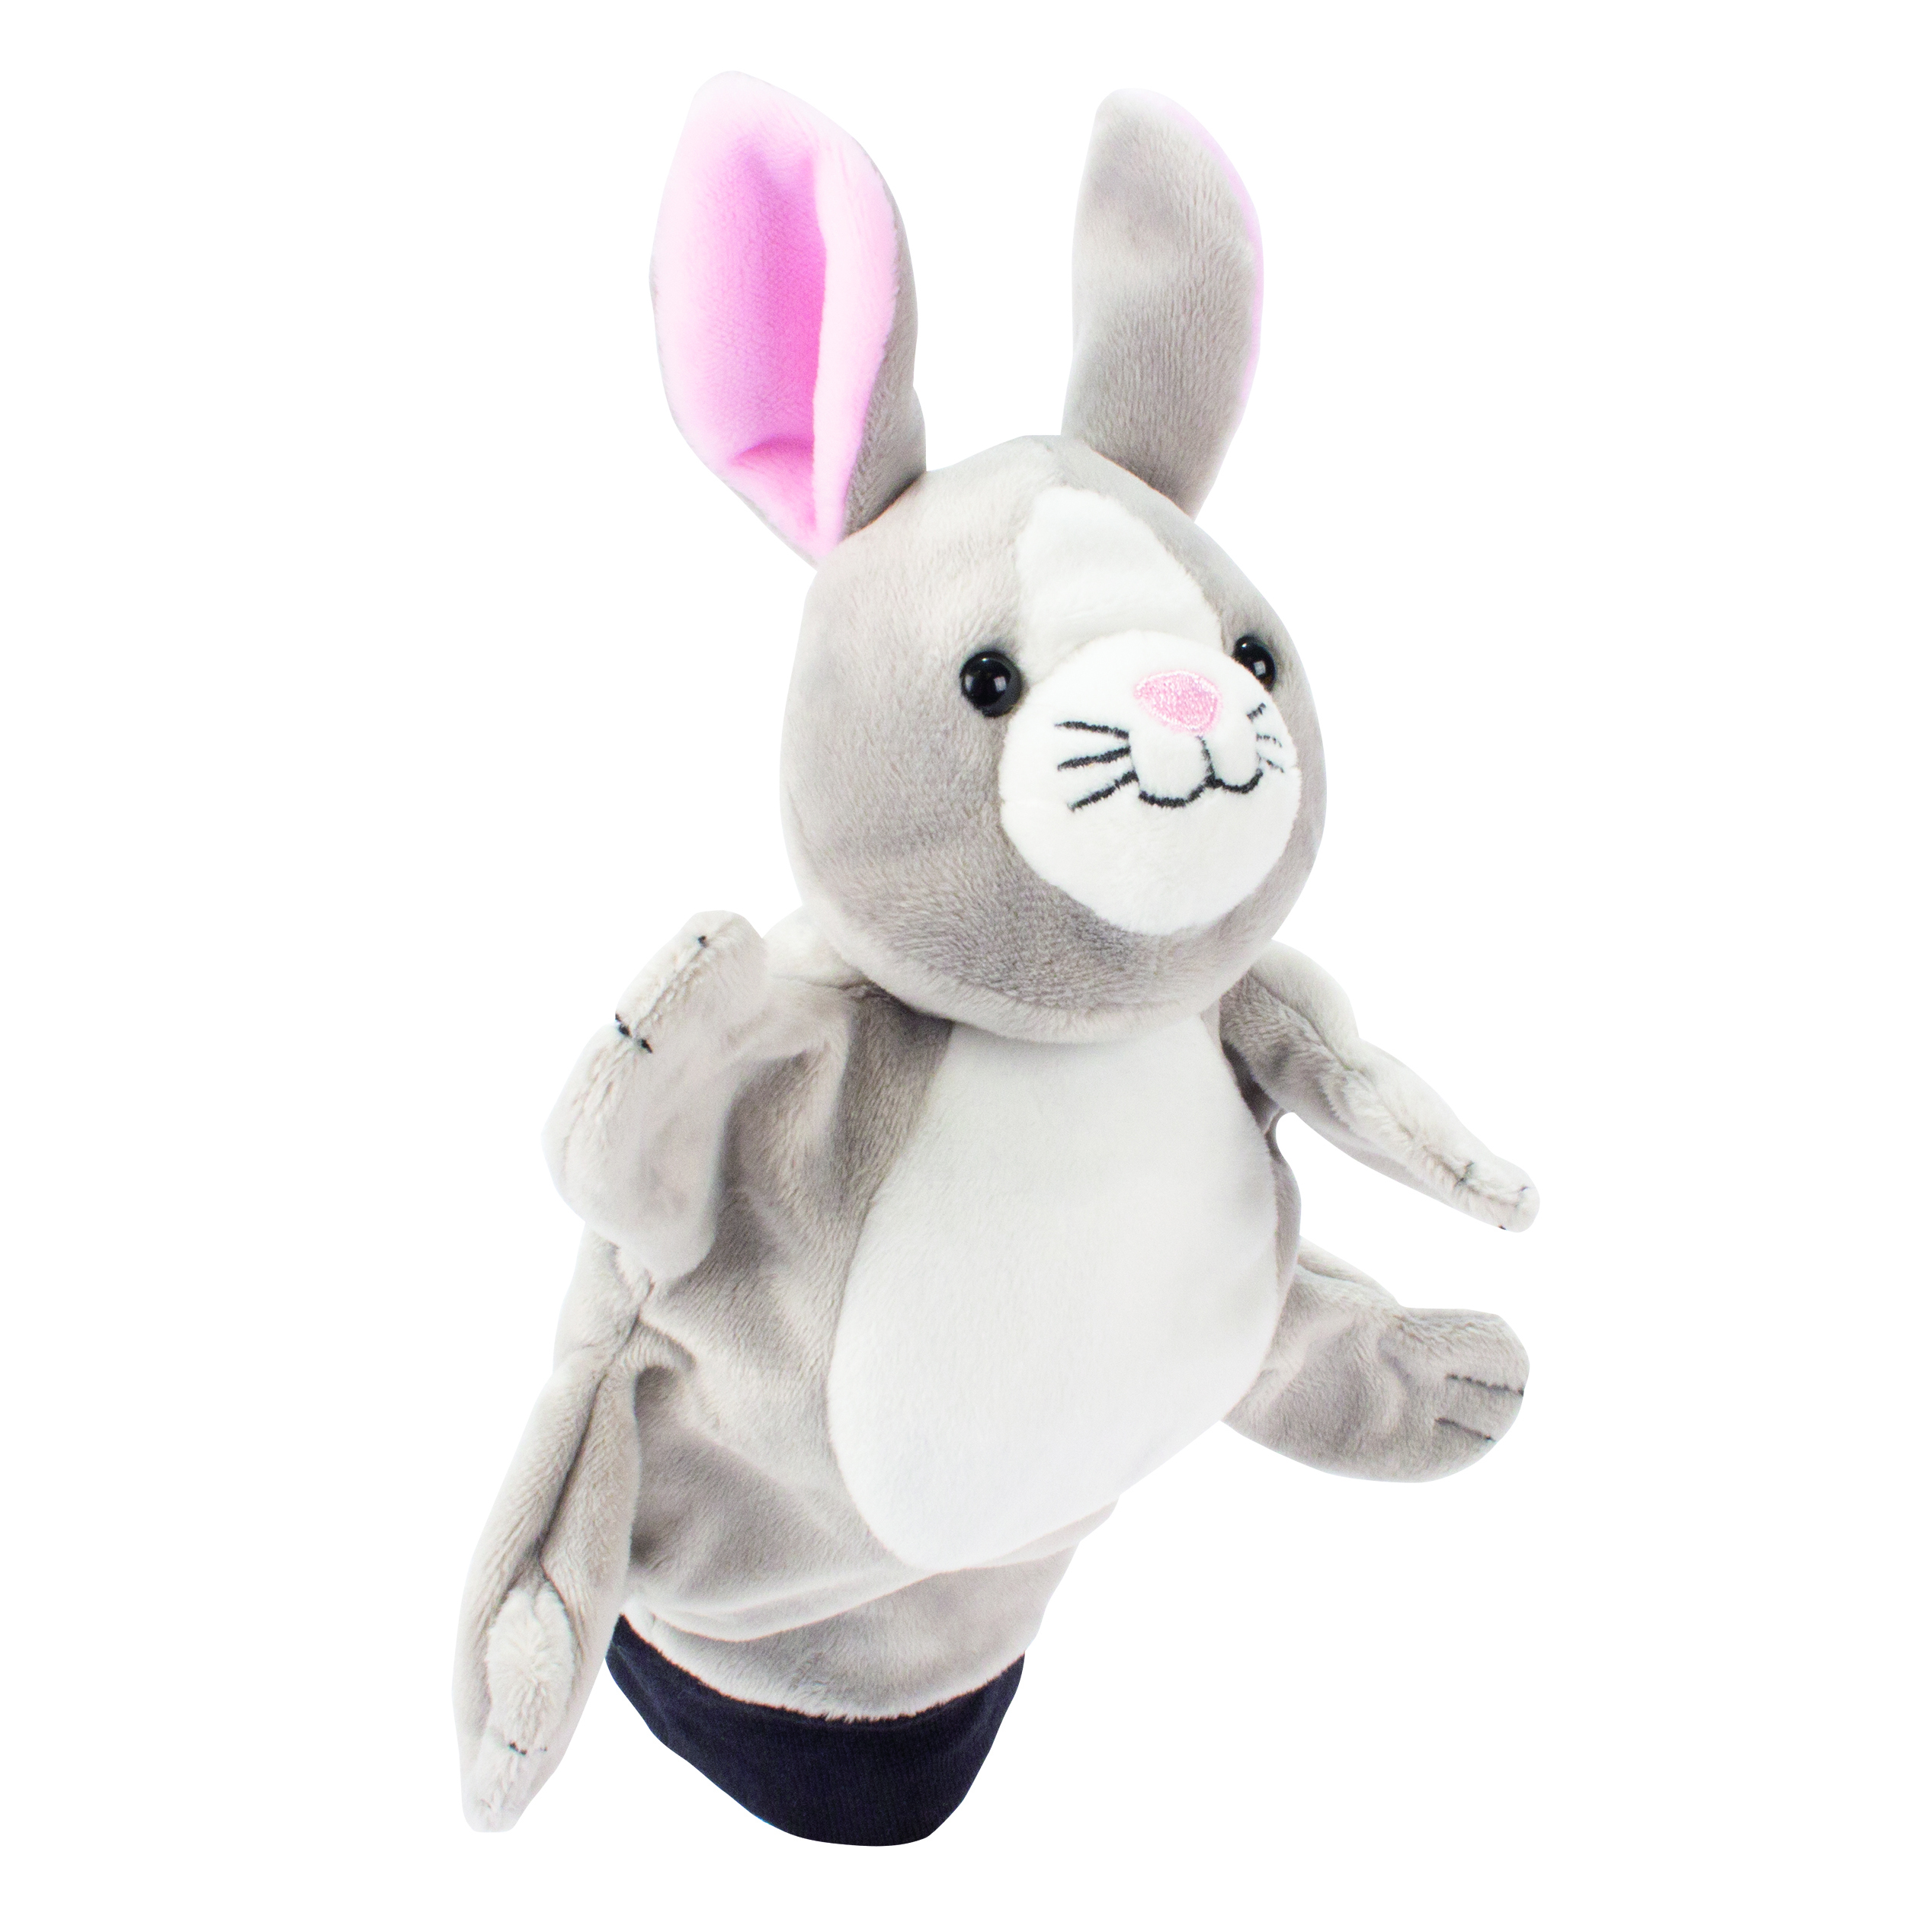 Hand puppet rabbit - by Beleduc